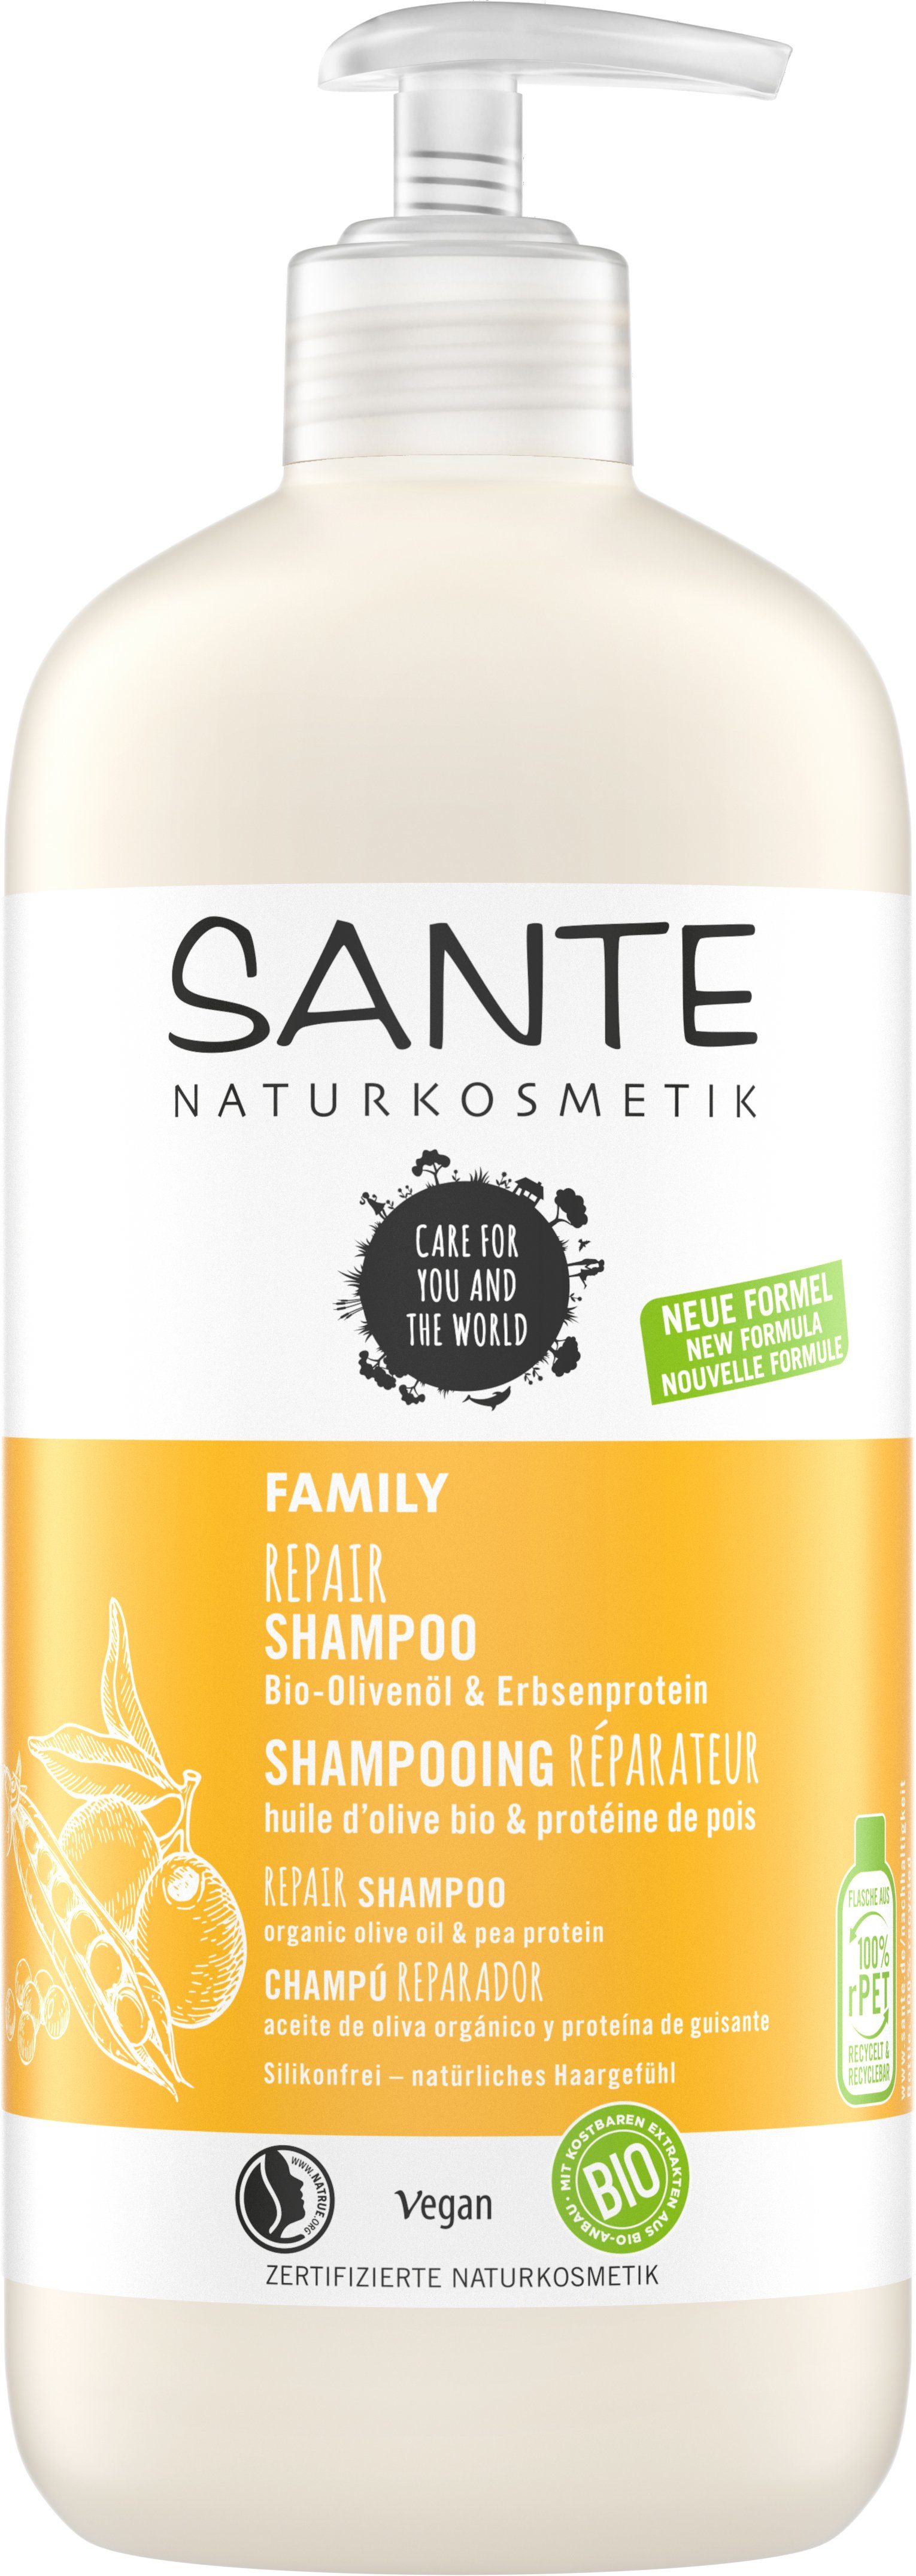 FAMILY Repair Haarshampoo SANTE Bio-Olivenöl